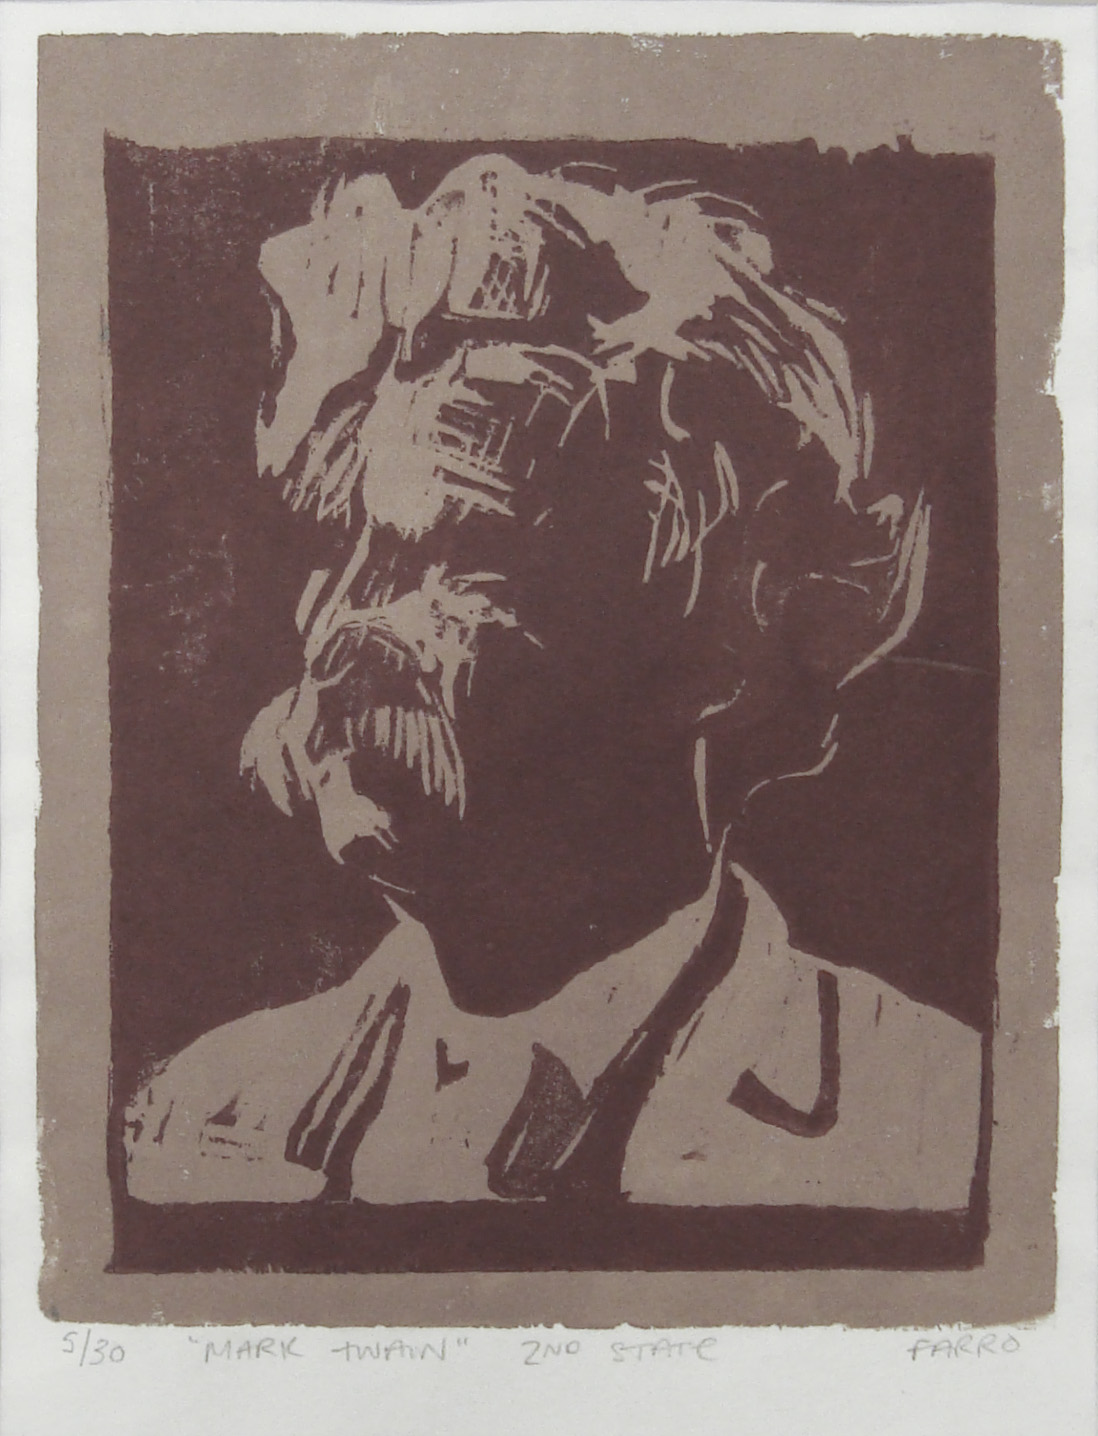   Mark Twain   woodblock print  2nd state  edition of 30  6x7" 